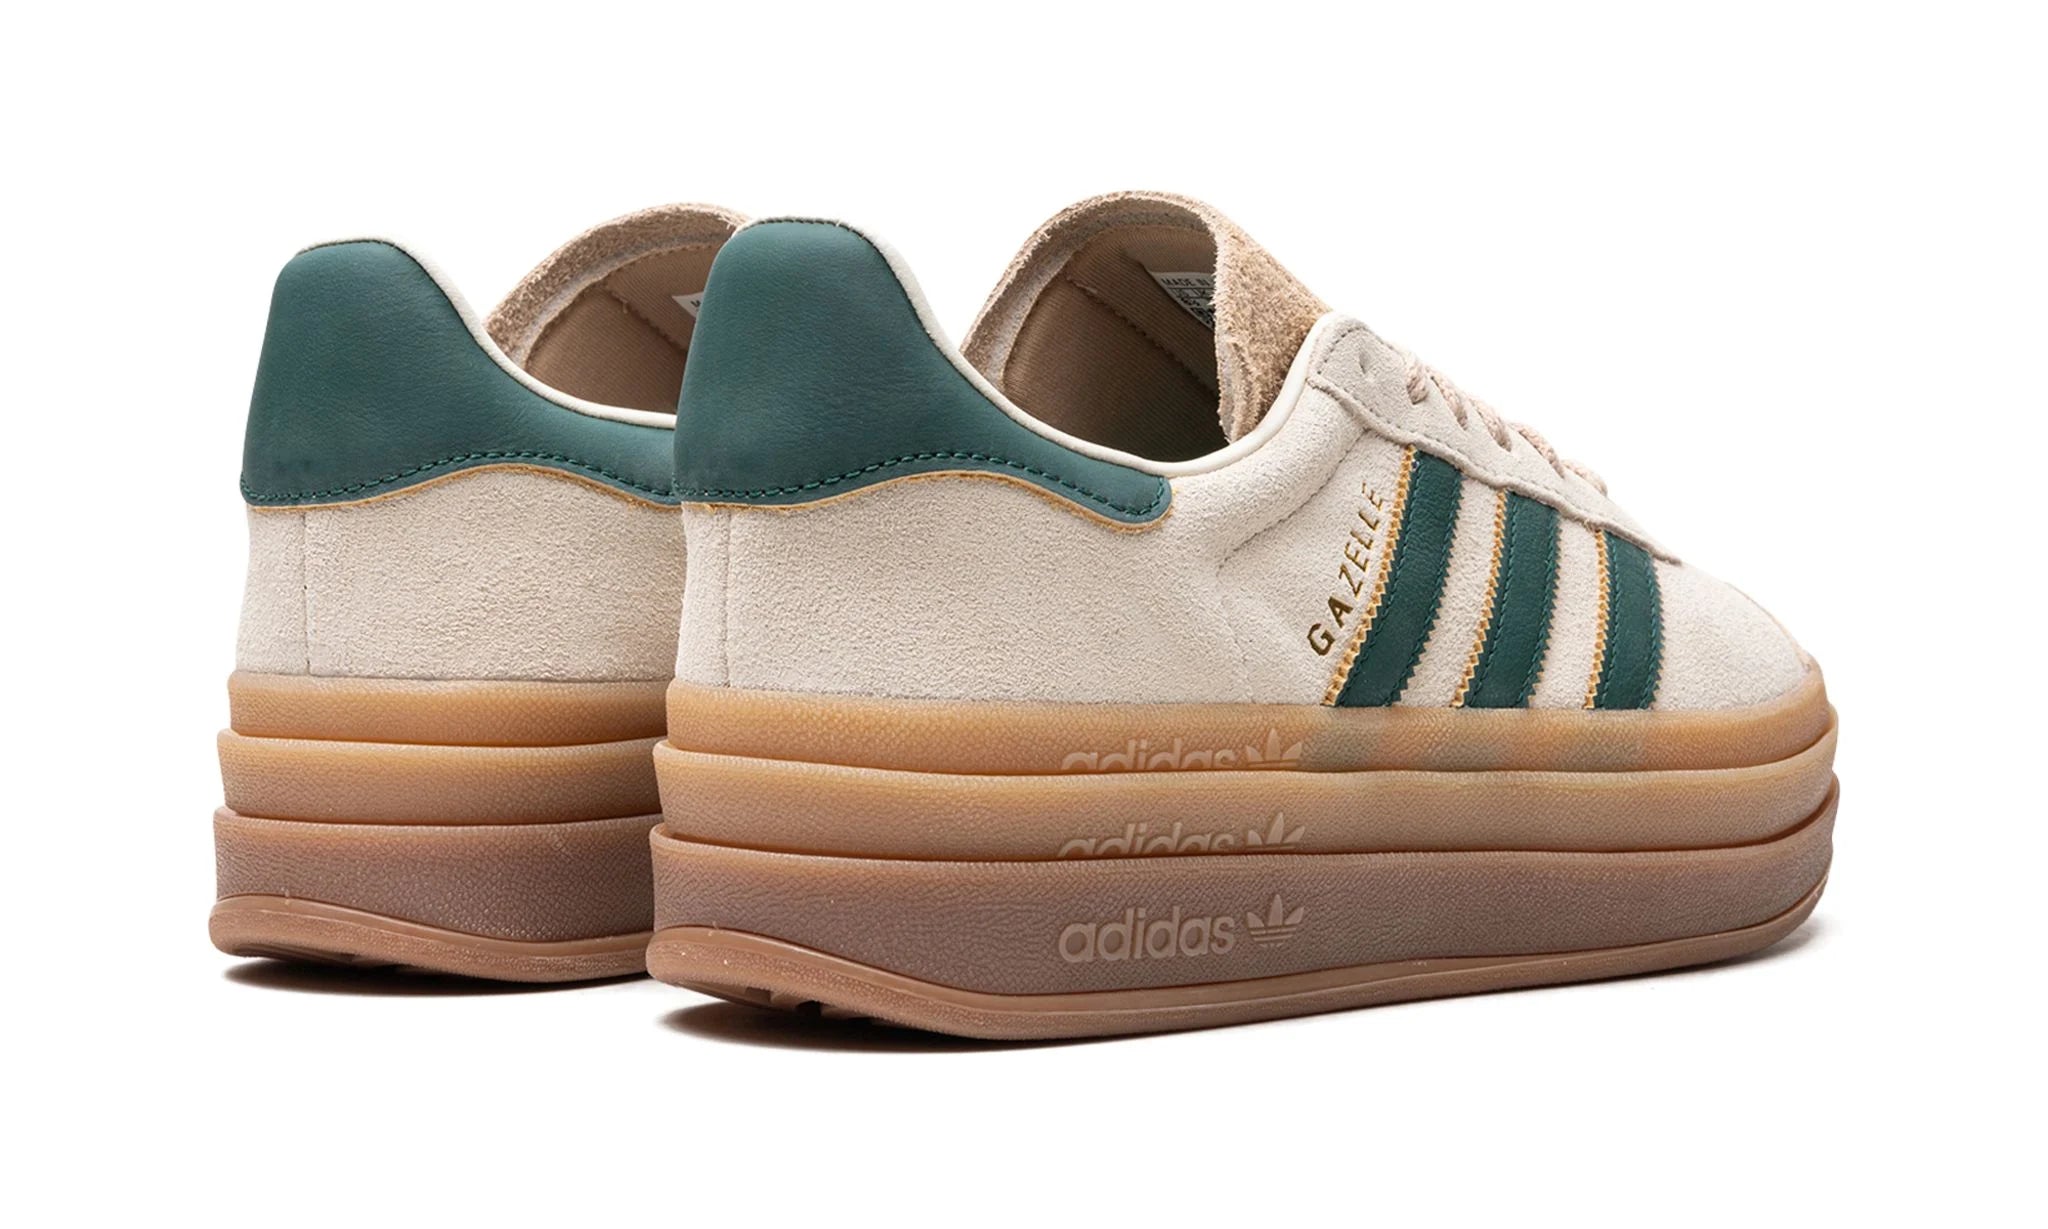 Adidas Gazelle Bold "Collegiate Green"